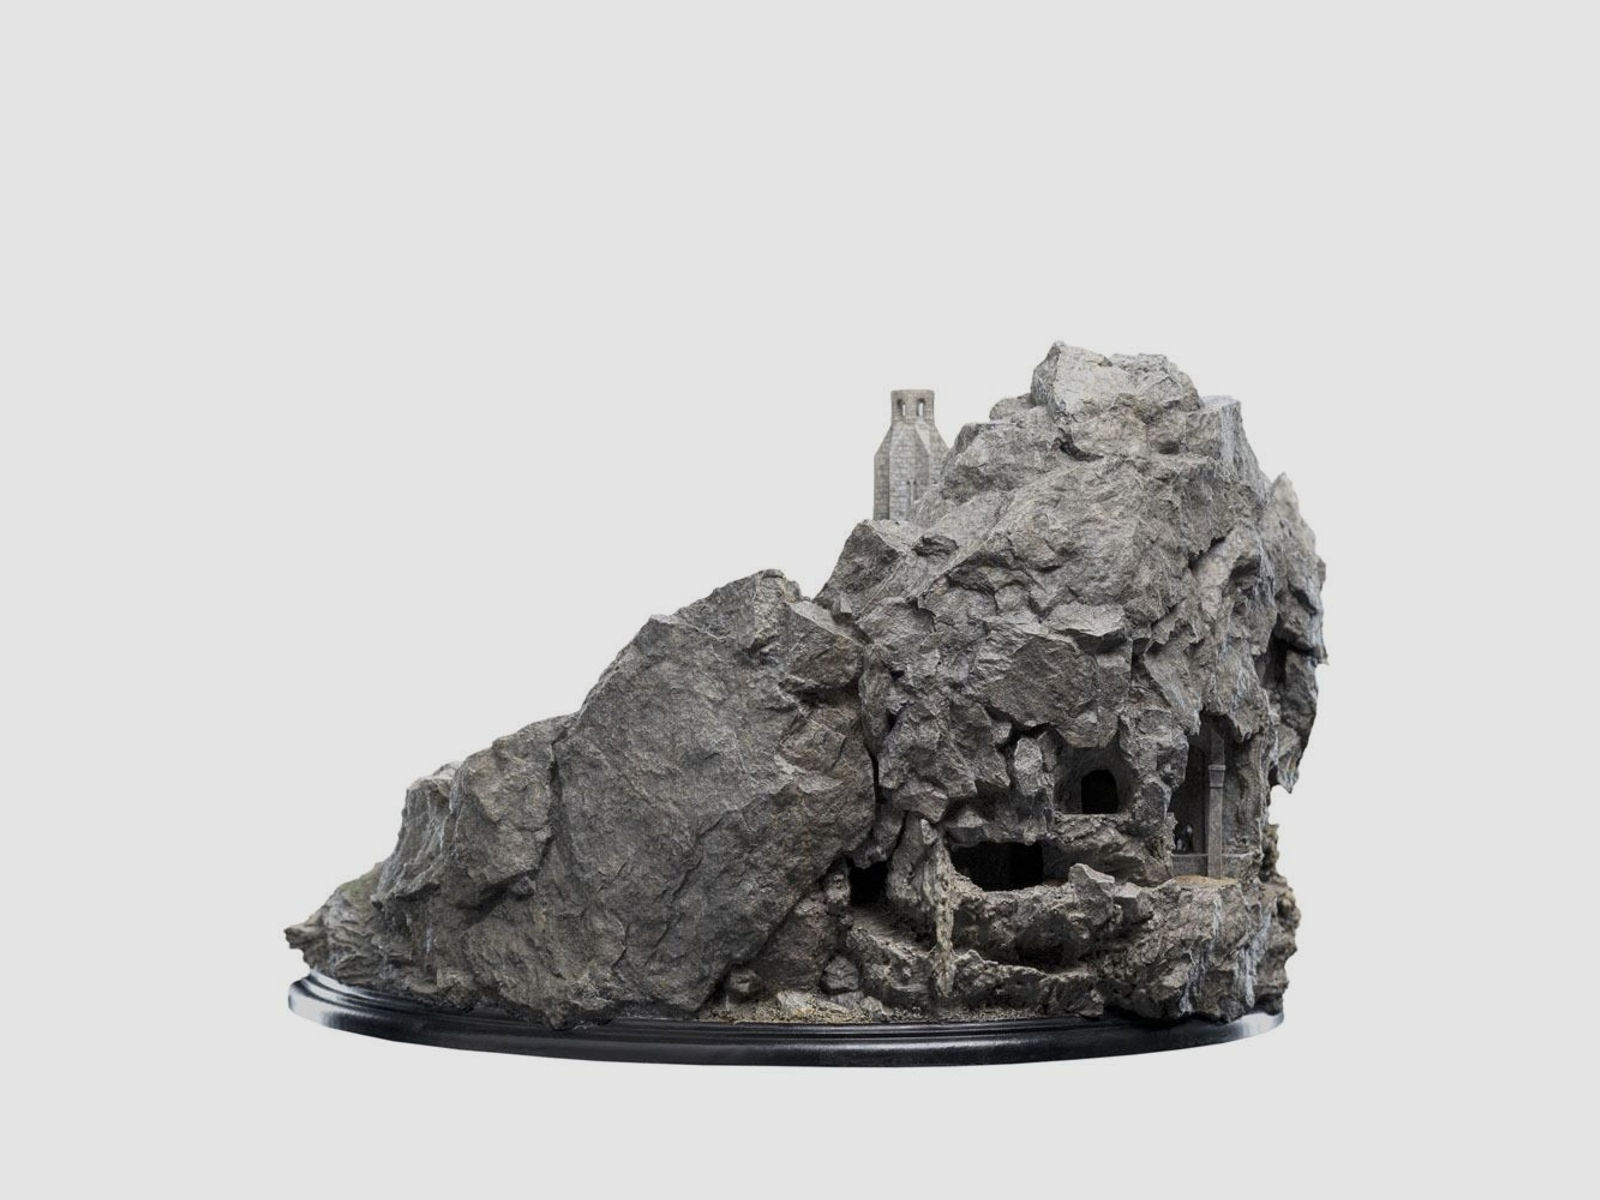 Herr der Ringe Statue Helms Klamm 27 cm | 42729